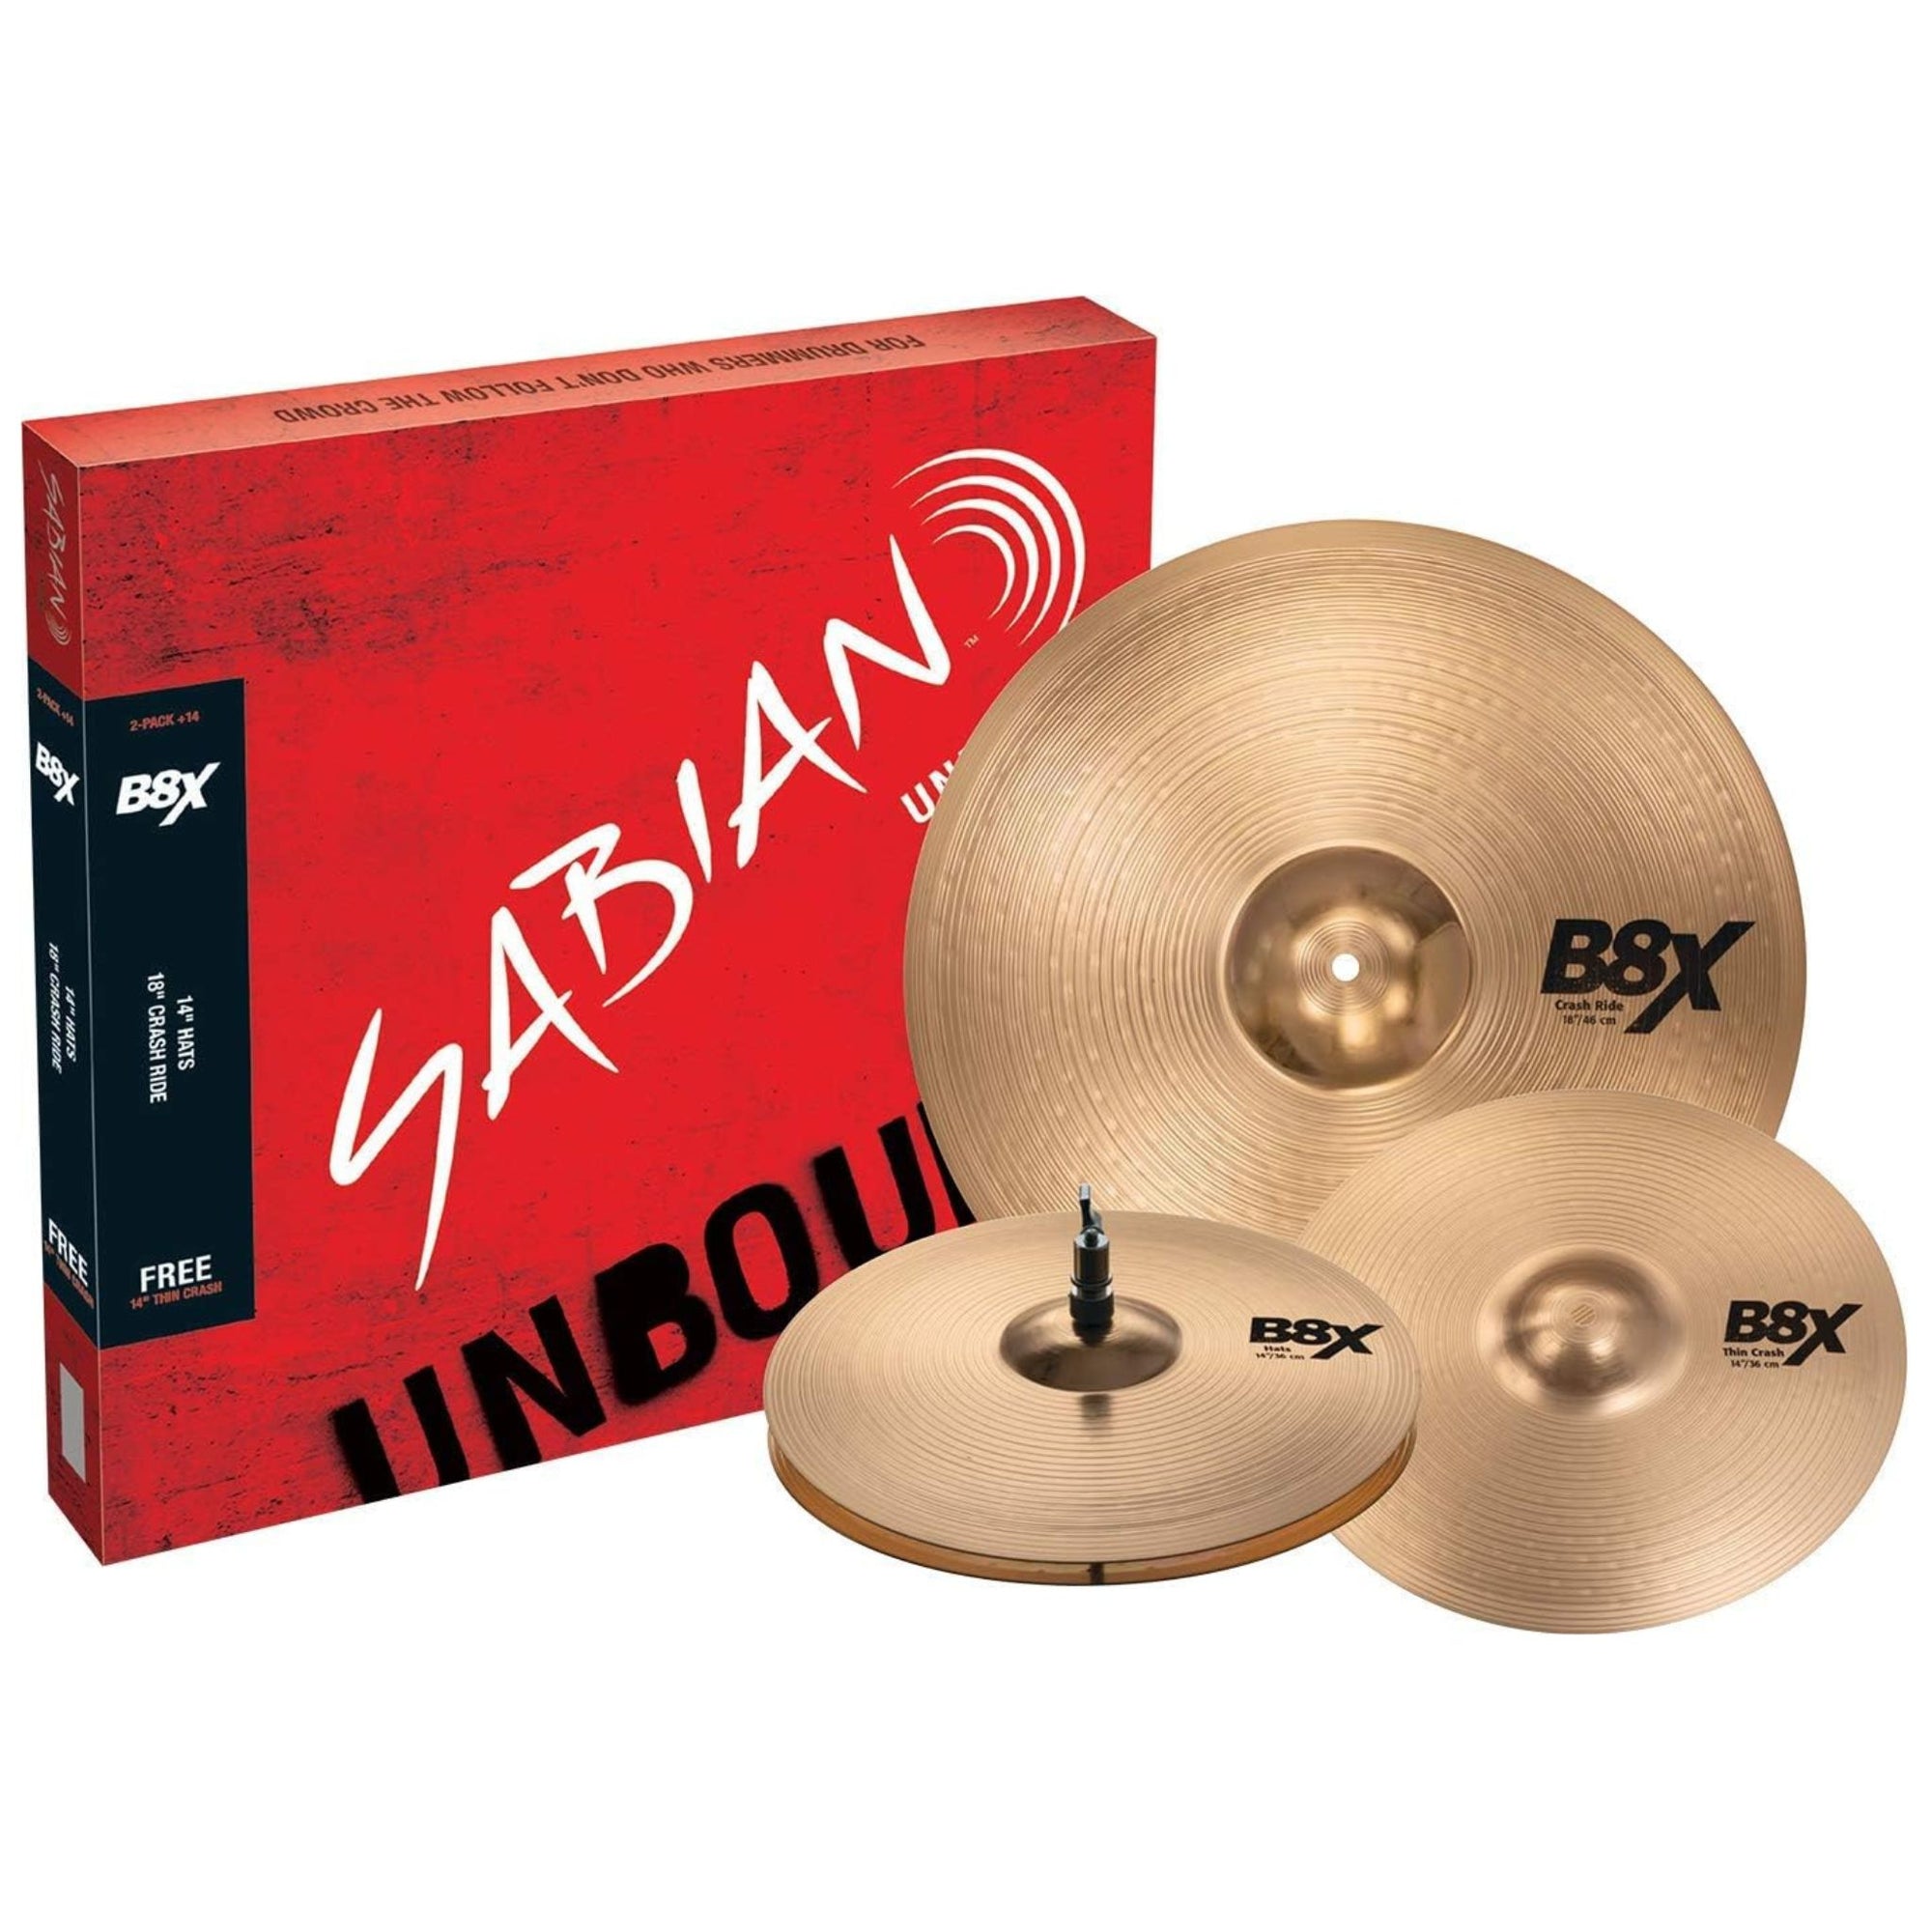 Sabian B8X 2-Pack Cymbal Set with Bonus